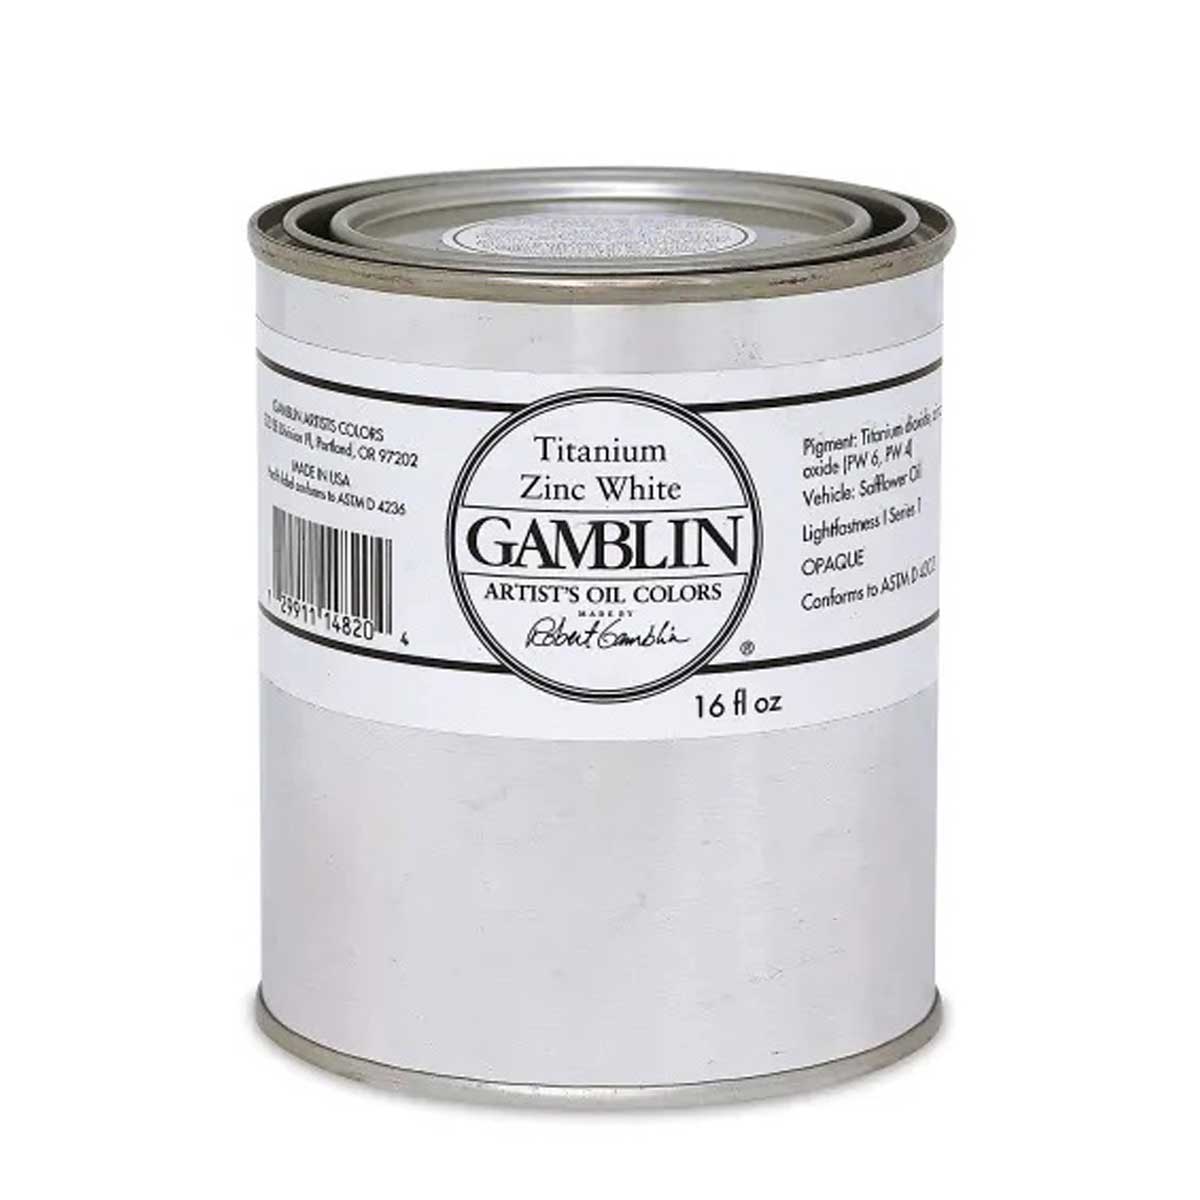 Gamblin Artitst's Oil Color - Titanium Zinc White, 500 ml (16oz)